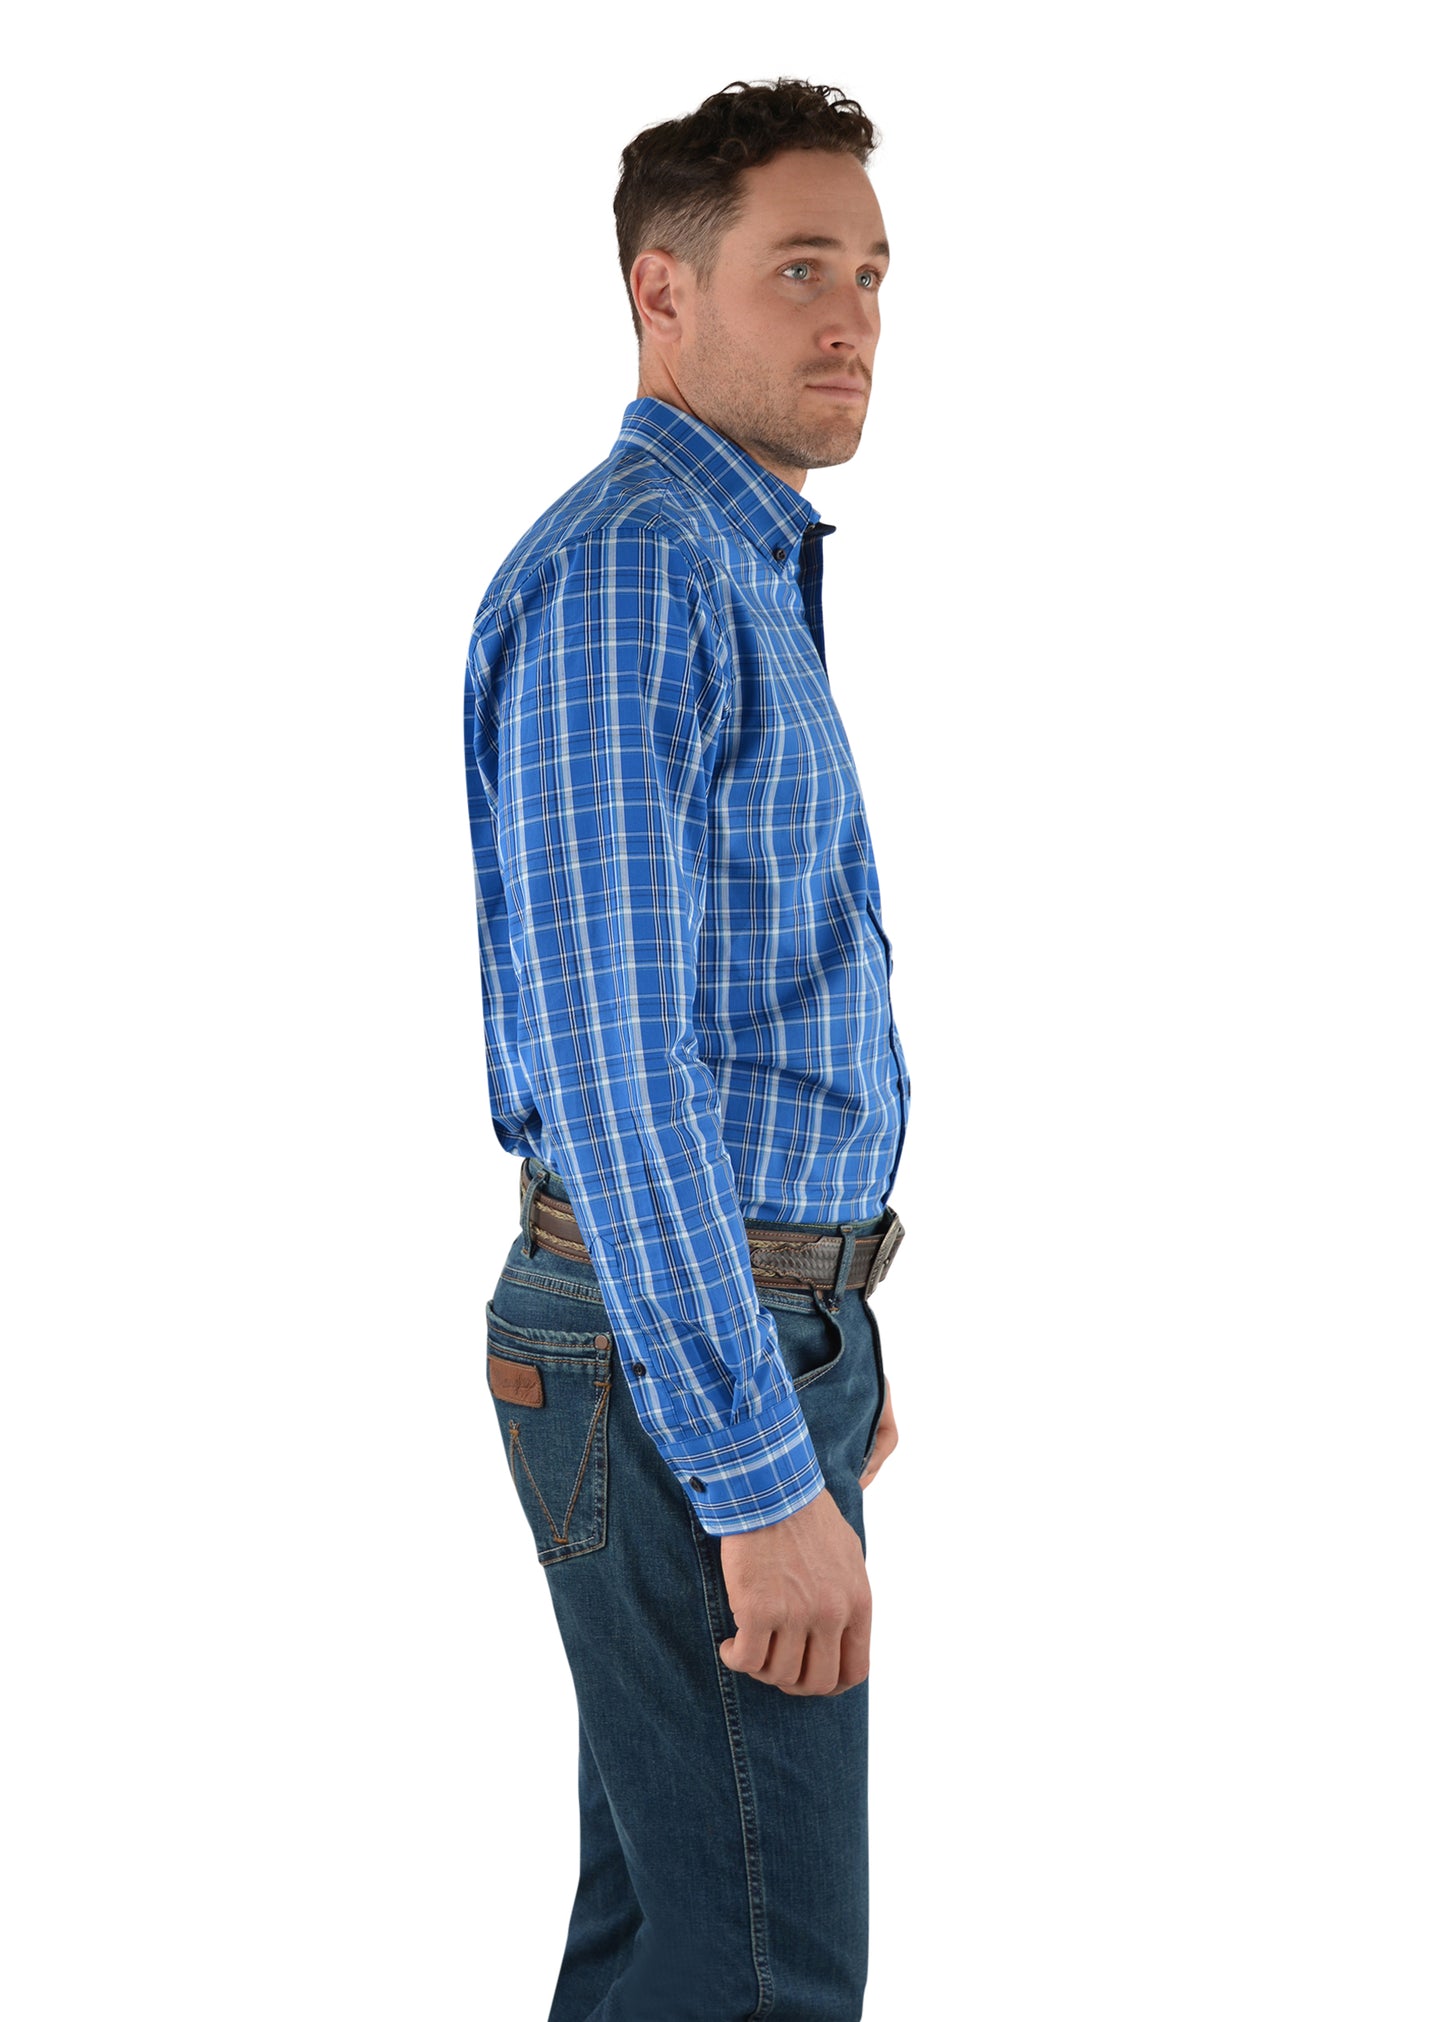 X2W1115756 Wrangler Men's Addition Check Button LS Shirt